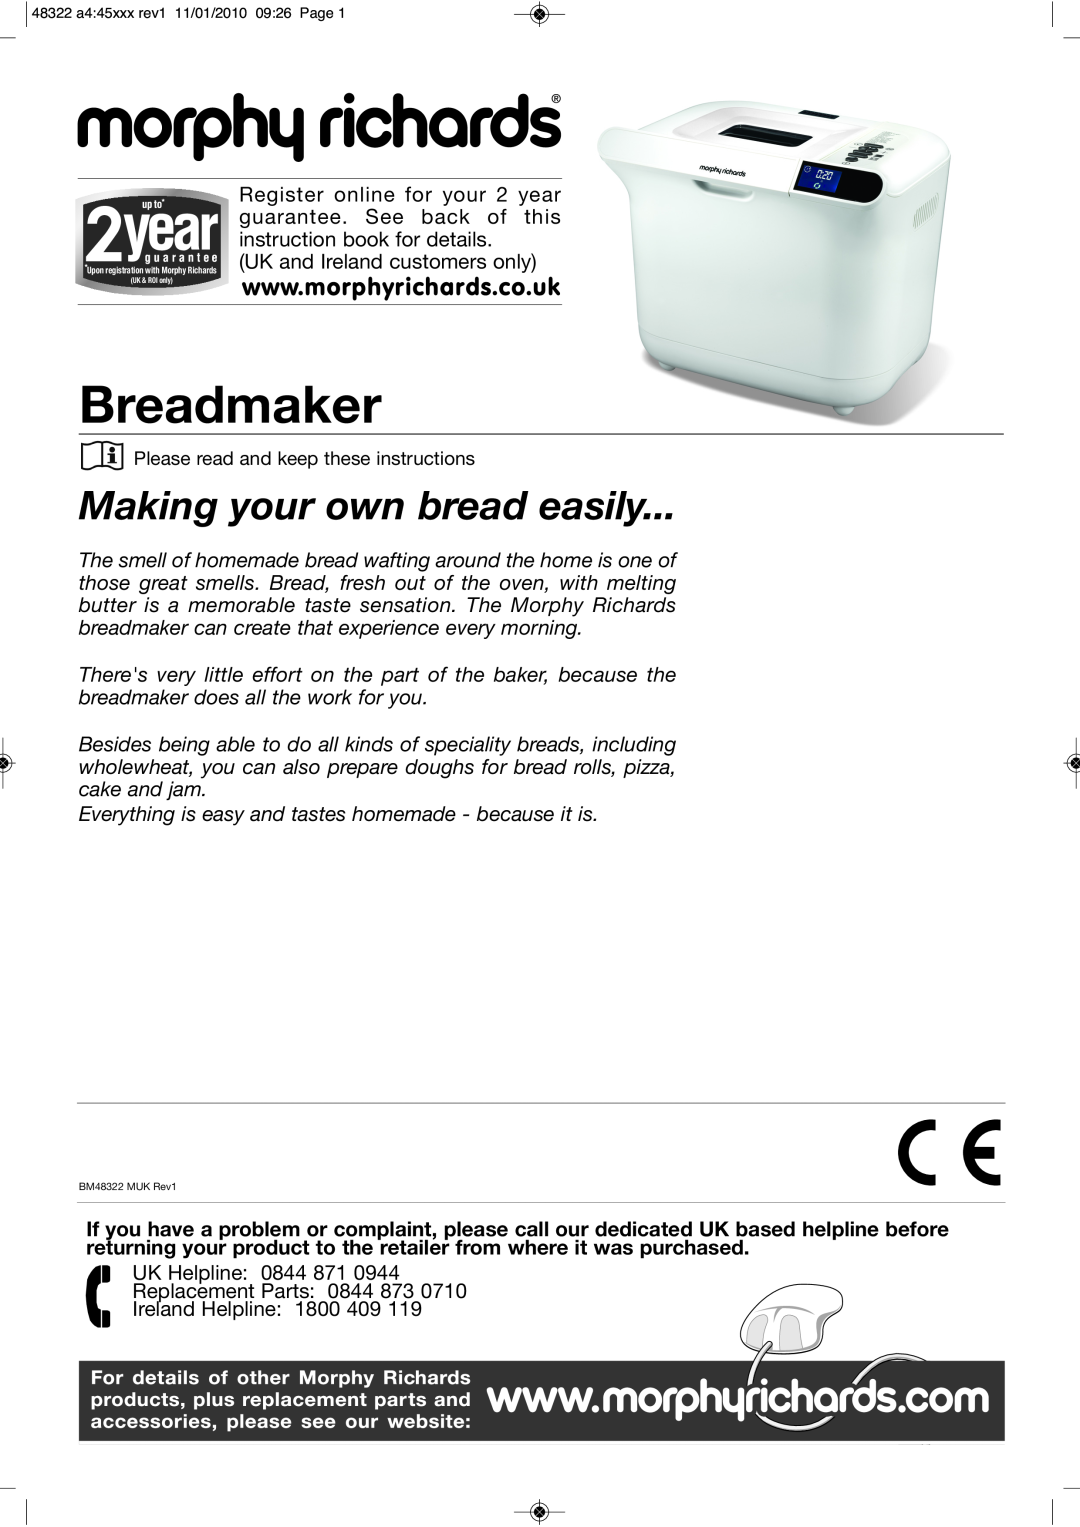 Morphy Richards BM48322 manual Breadmaker, Making your own bread easily 